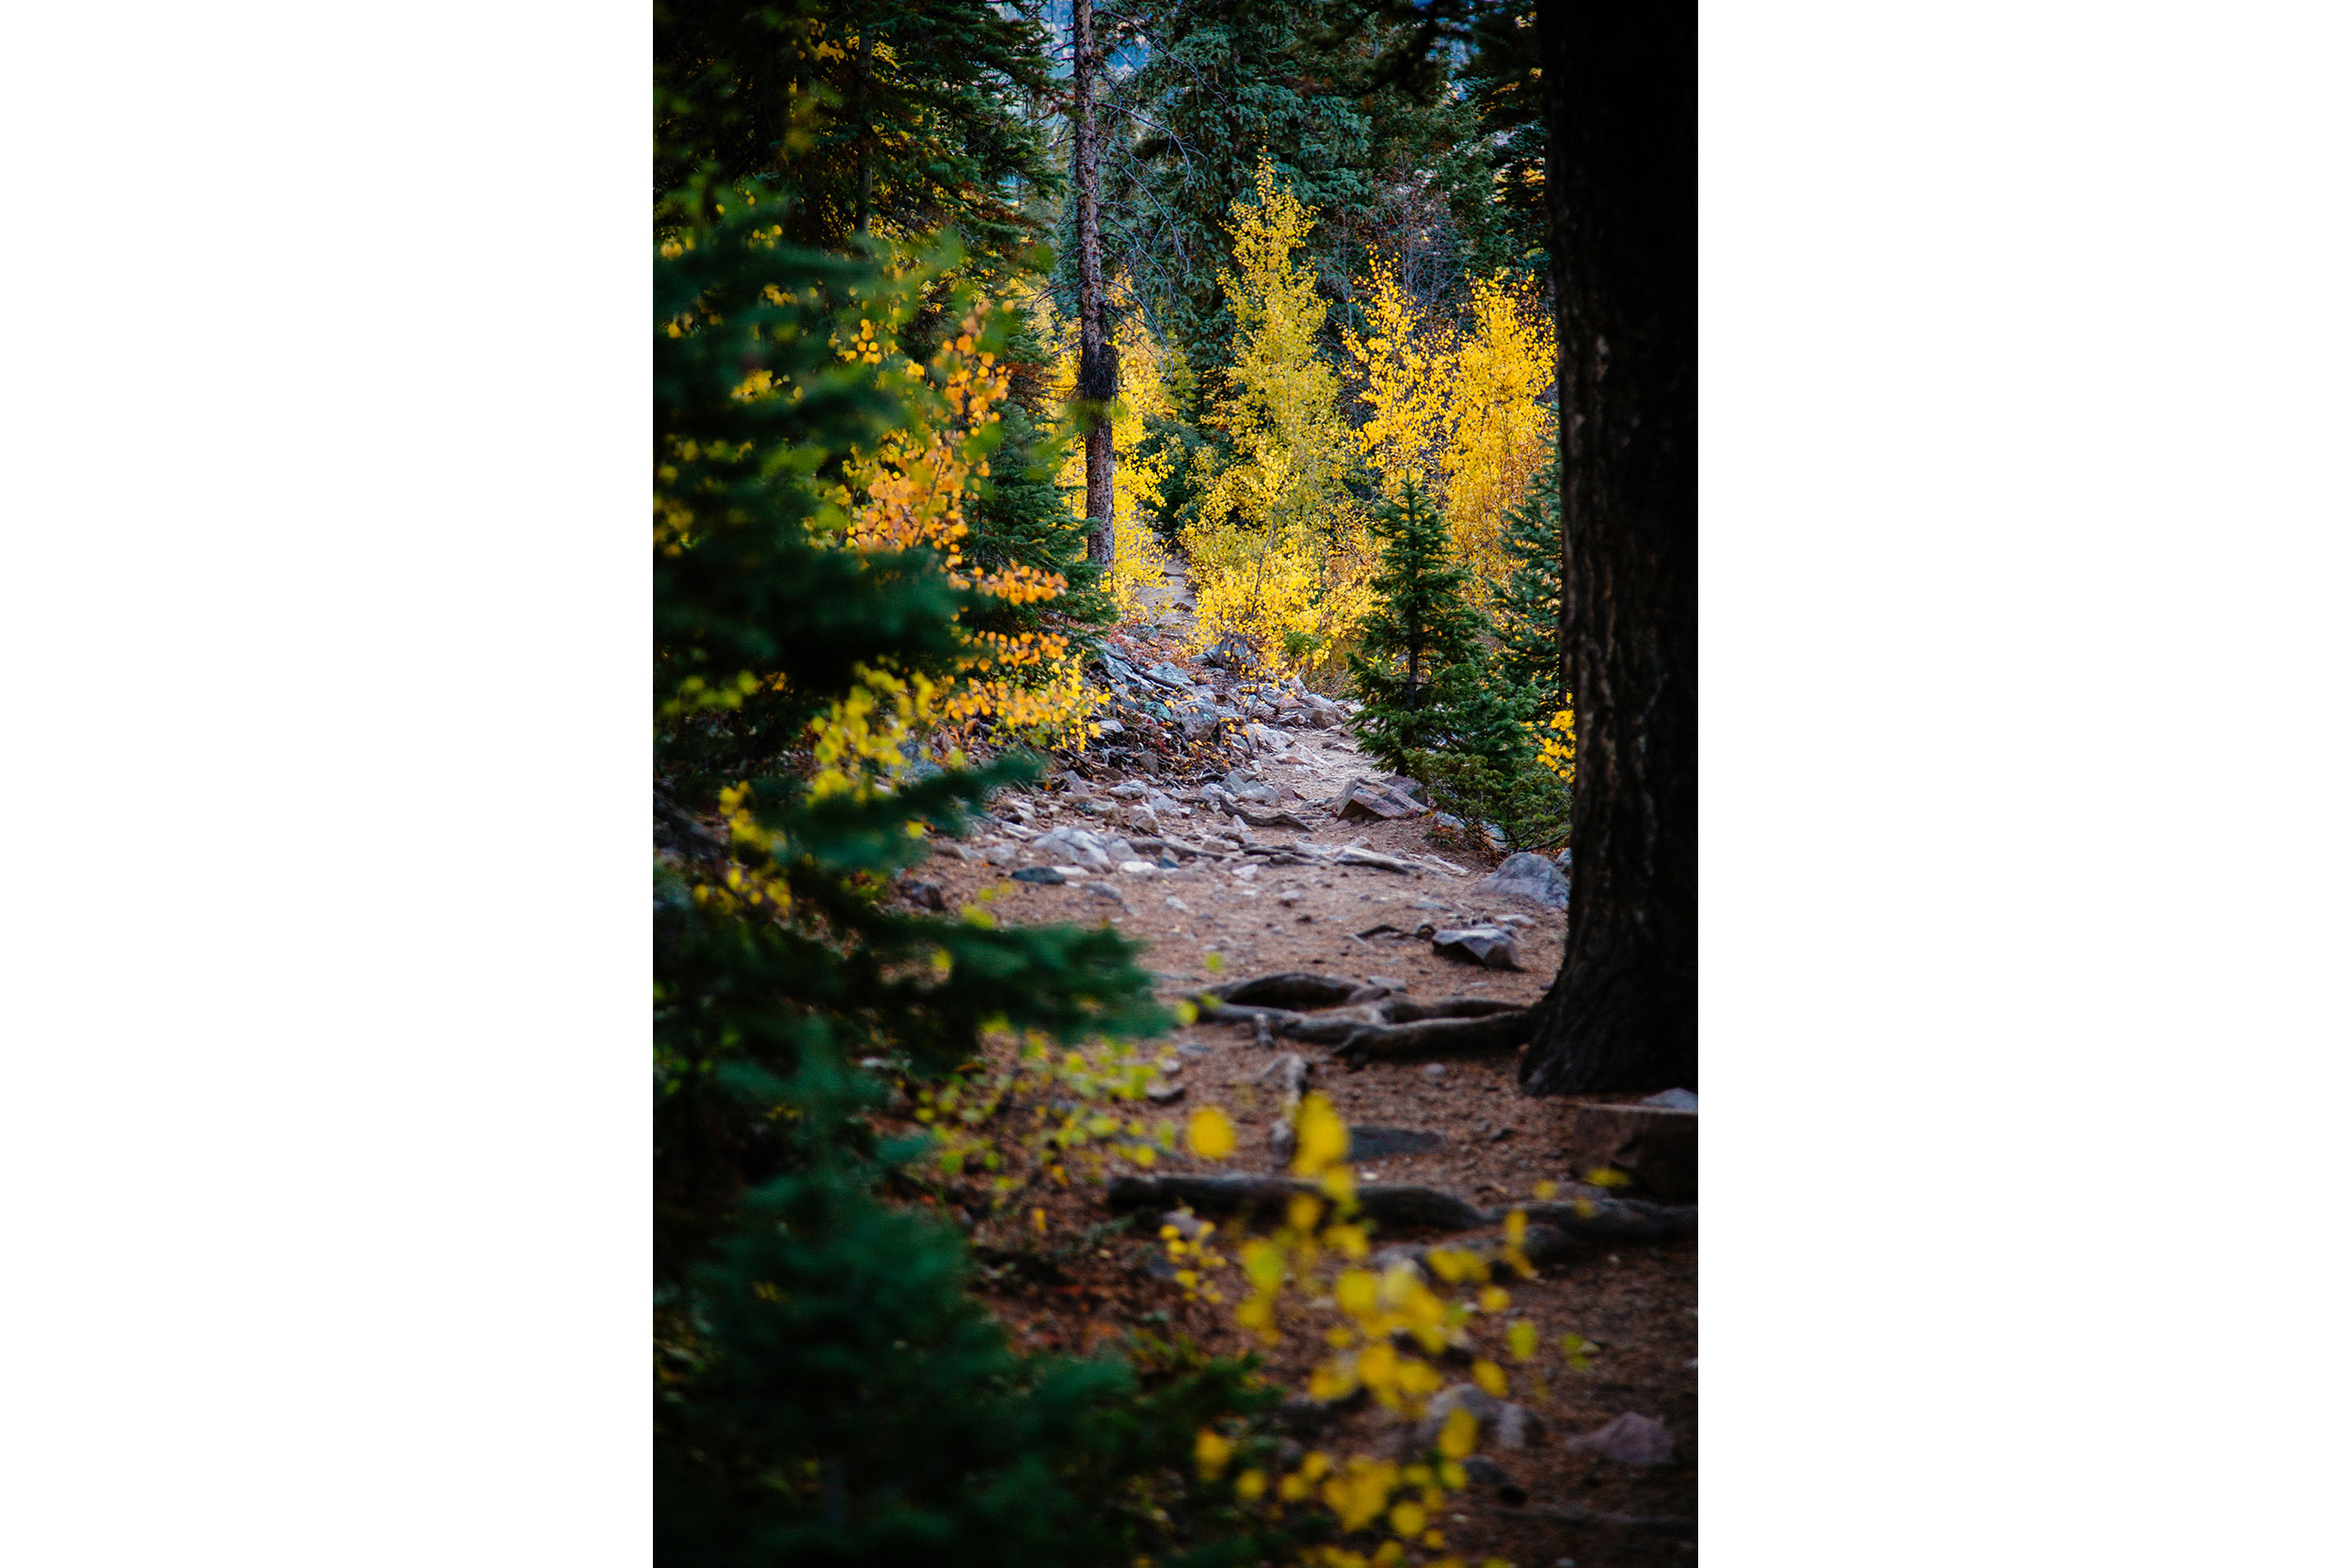 A path leads the way through fall foliage in Colorado's San Juan mountains